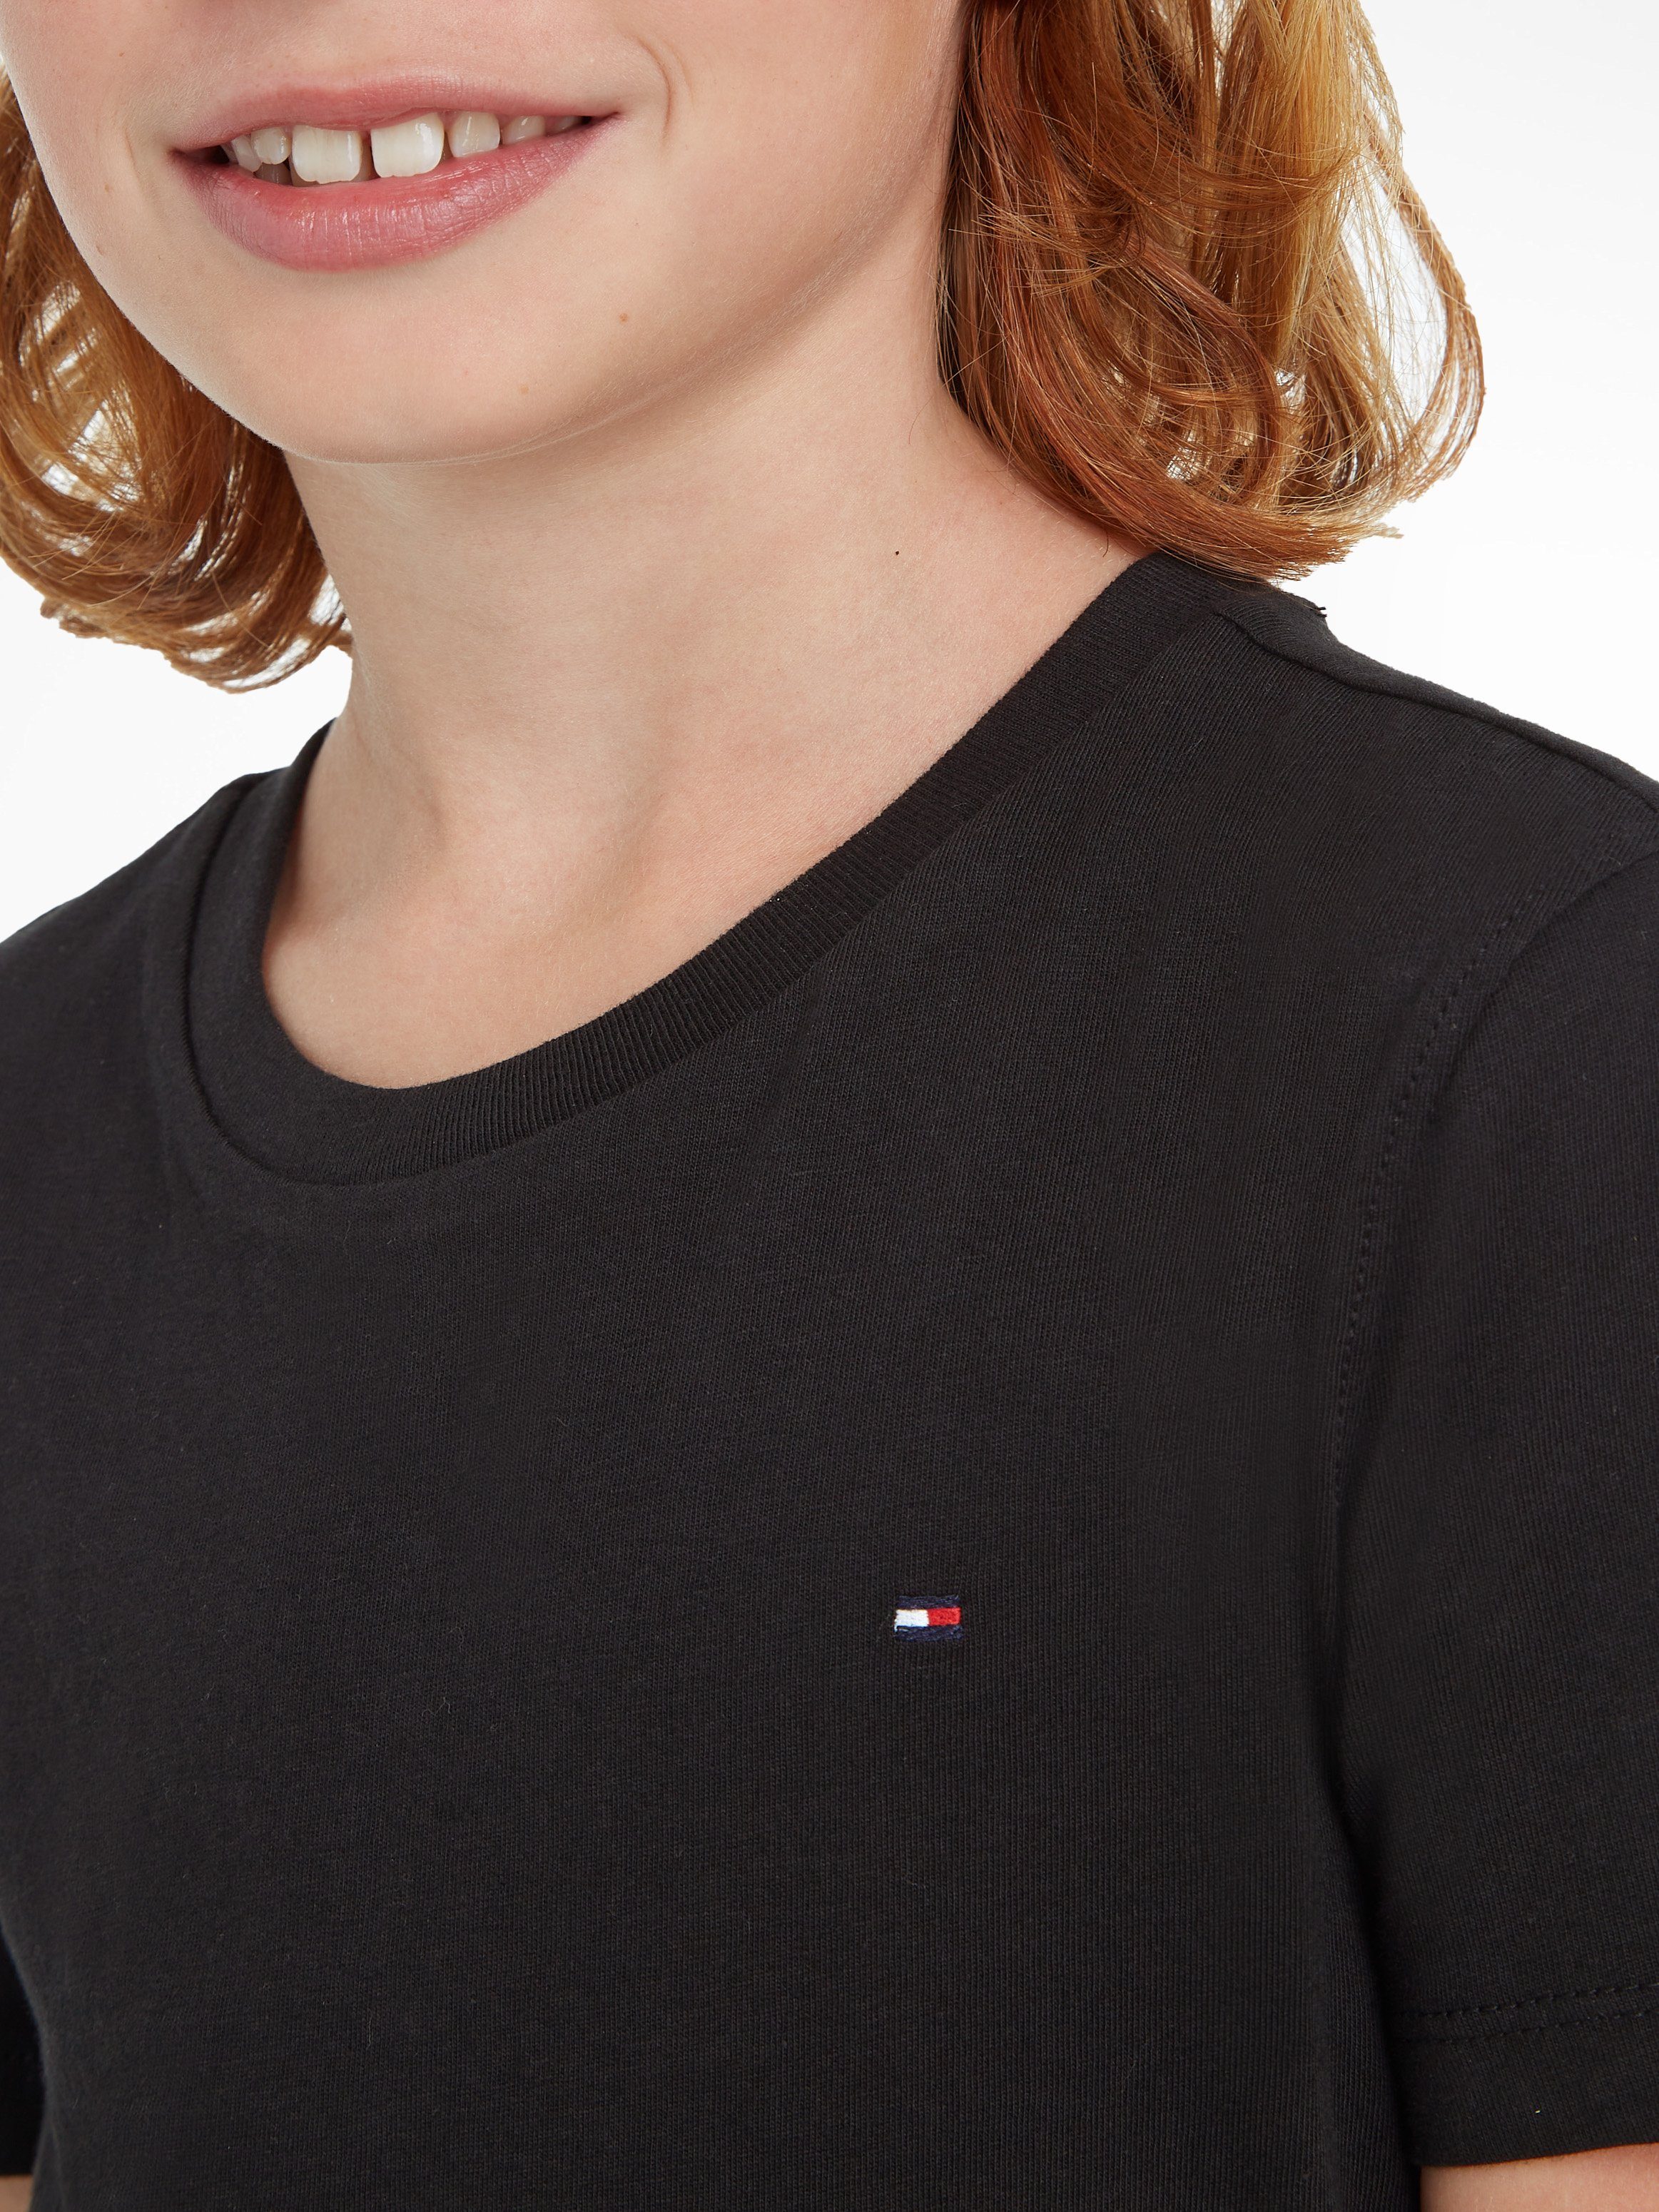 Tommy Hilfiger T-Shirt Junior CN Jungen Kids MiniMe,für BASIC KNIT BOYS Kinder